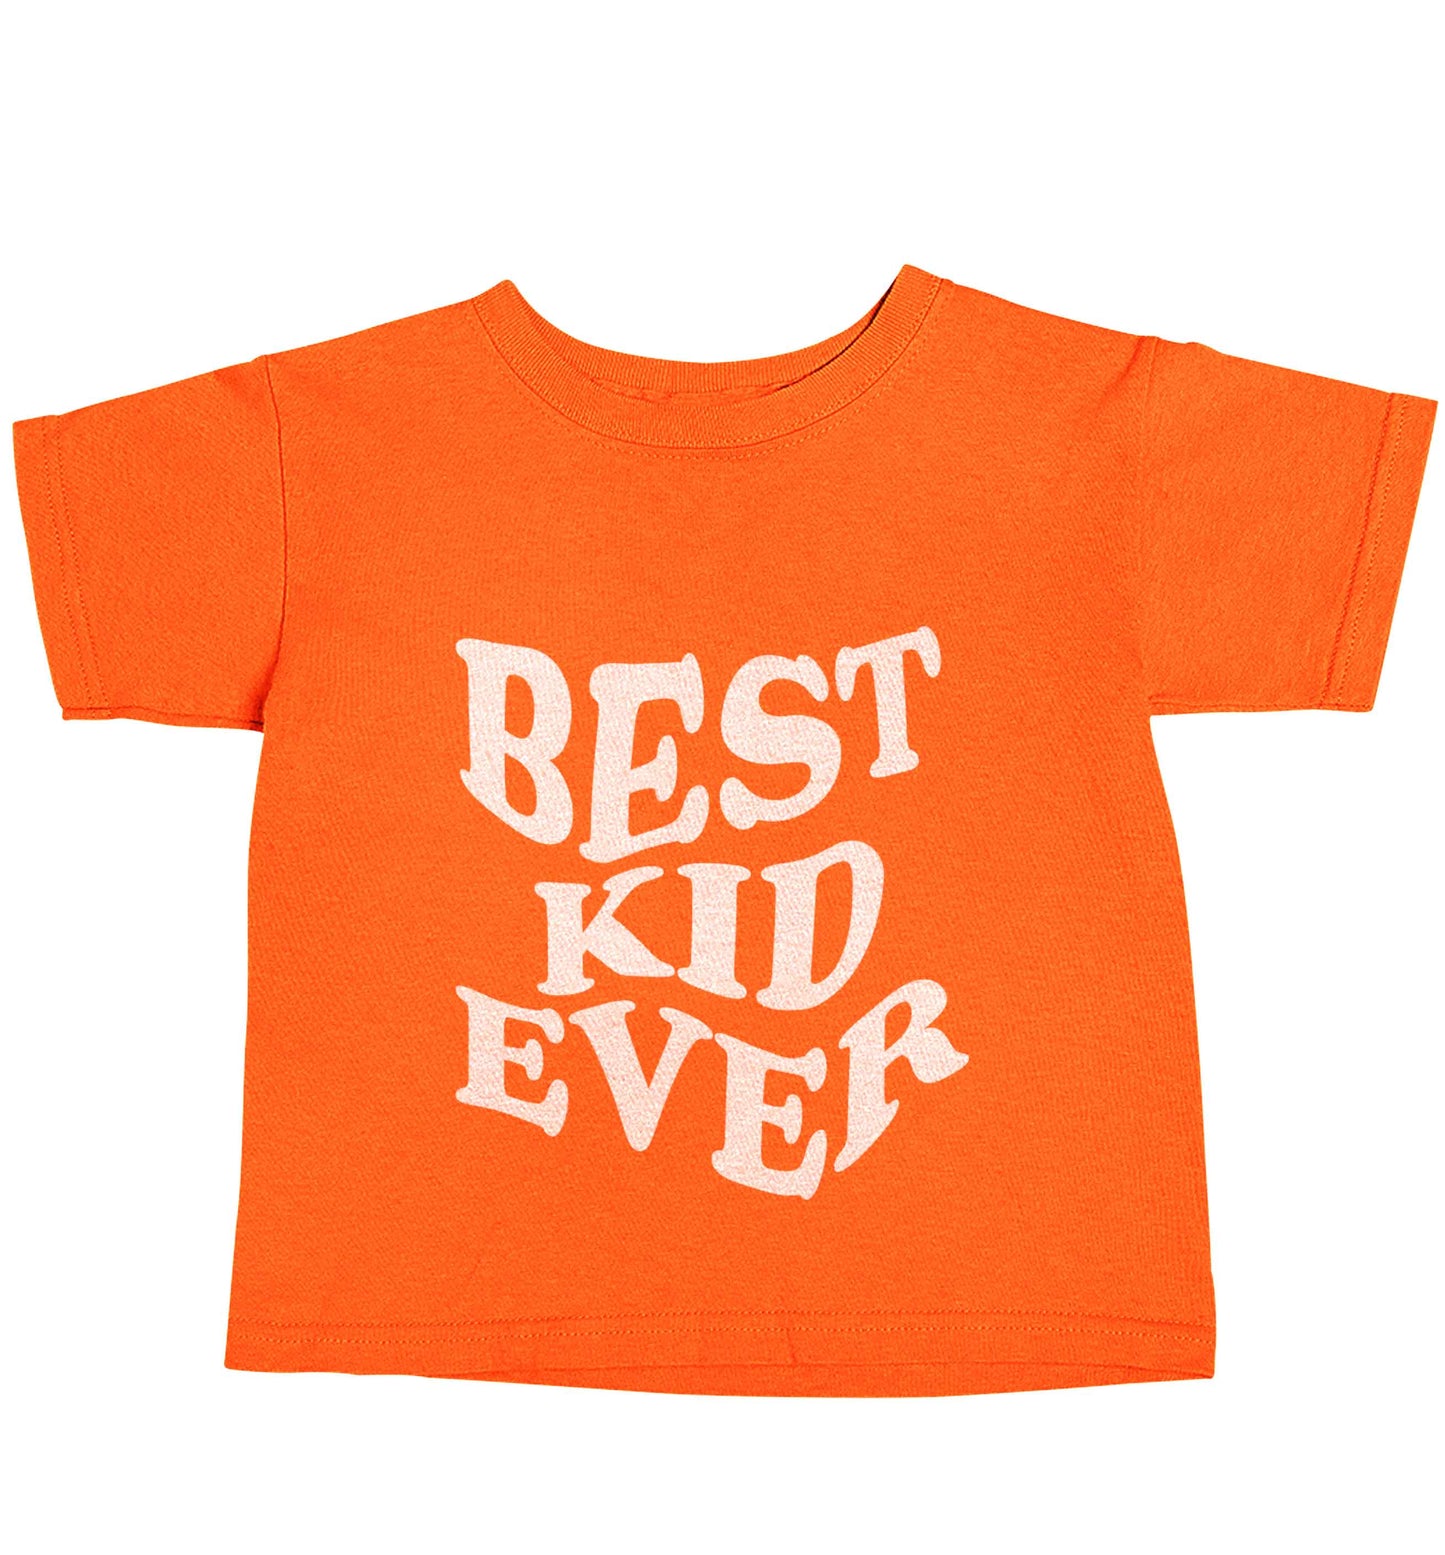 Best kid ever orange baby toddler Tshirt 2 Years